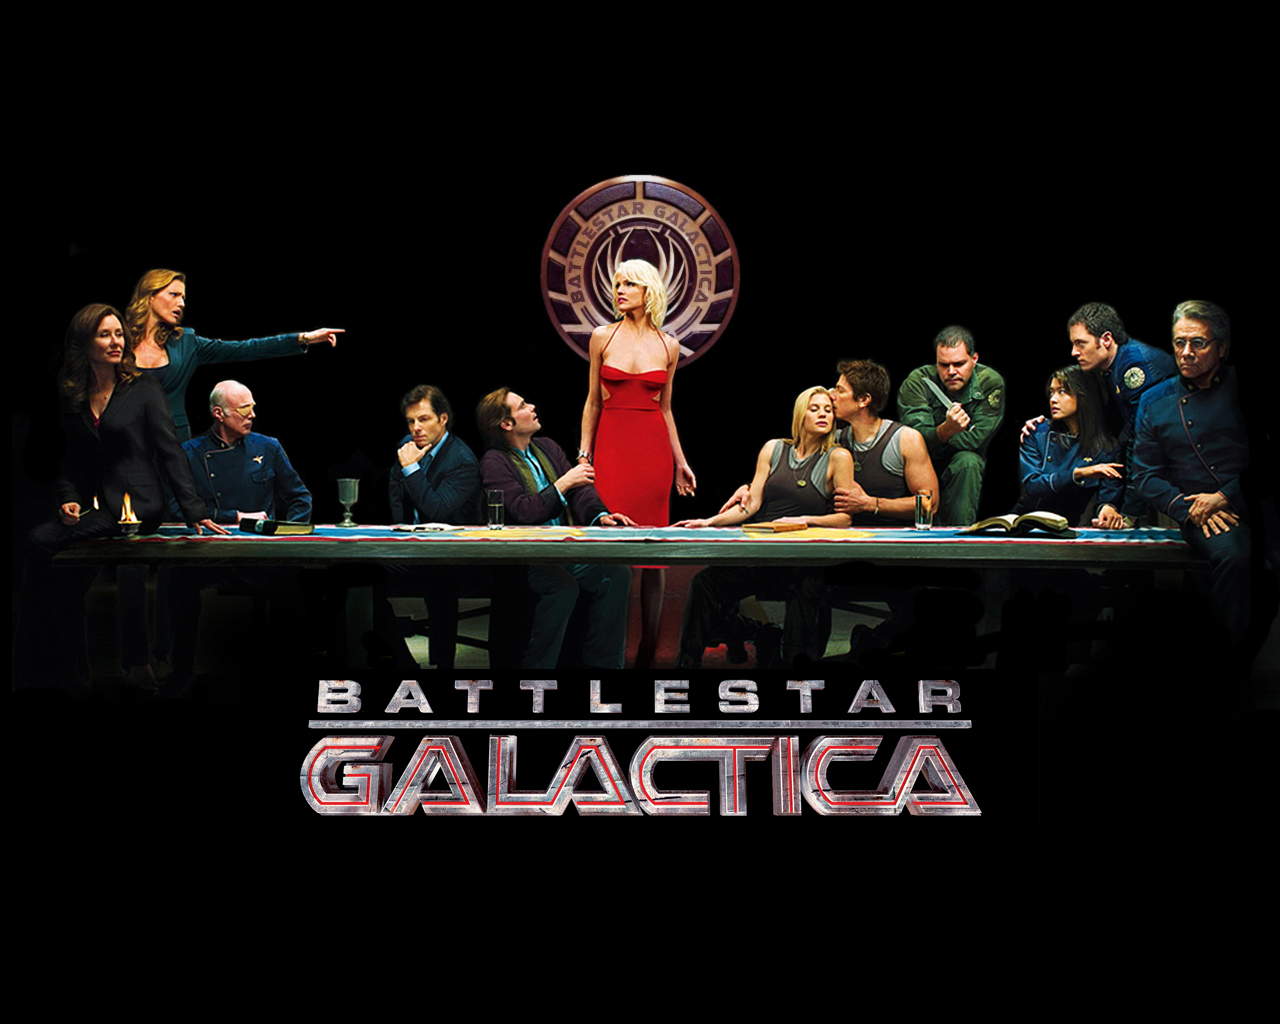 Download cylon battlestar galactica s for ile phone free cylon battlestar galactica hd pictures